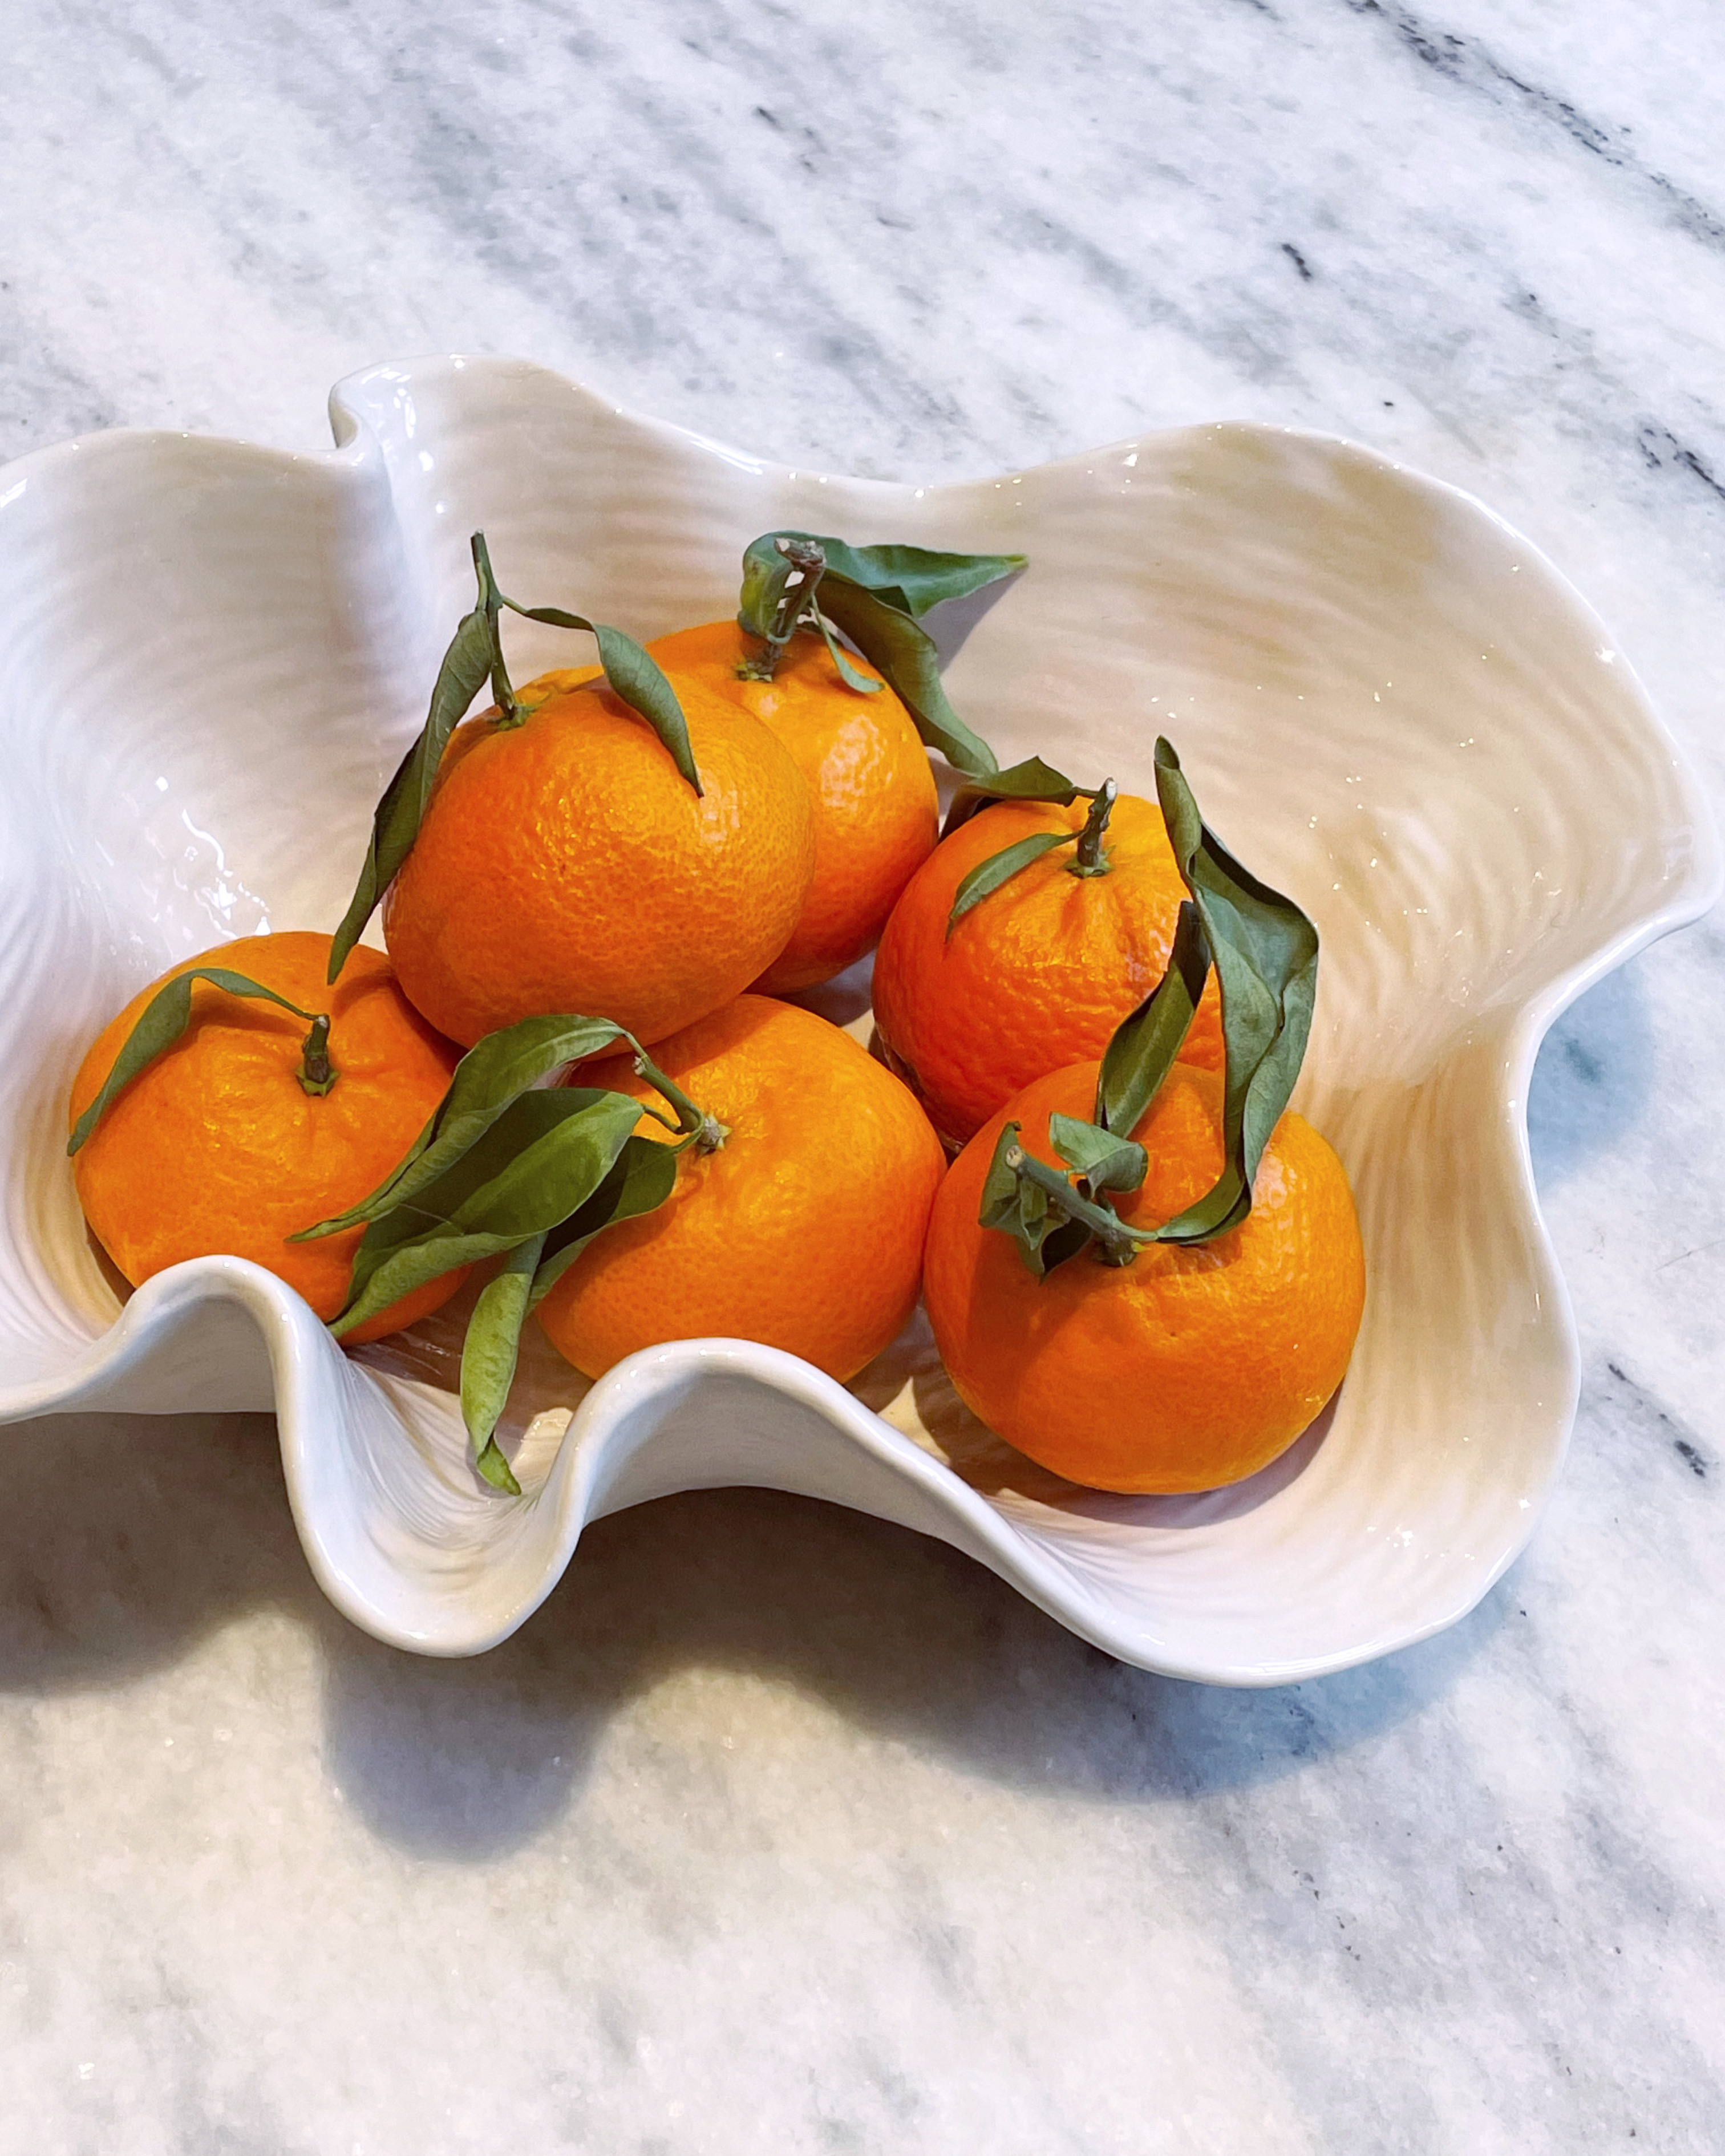 Shell fruit bowls - Lara Decorative Bowl from Anthropologie - style blog